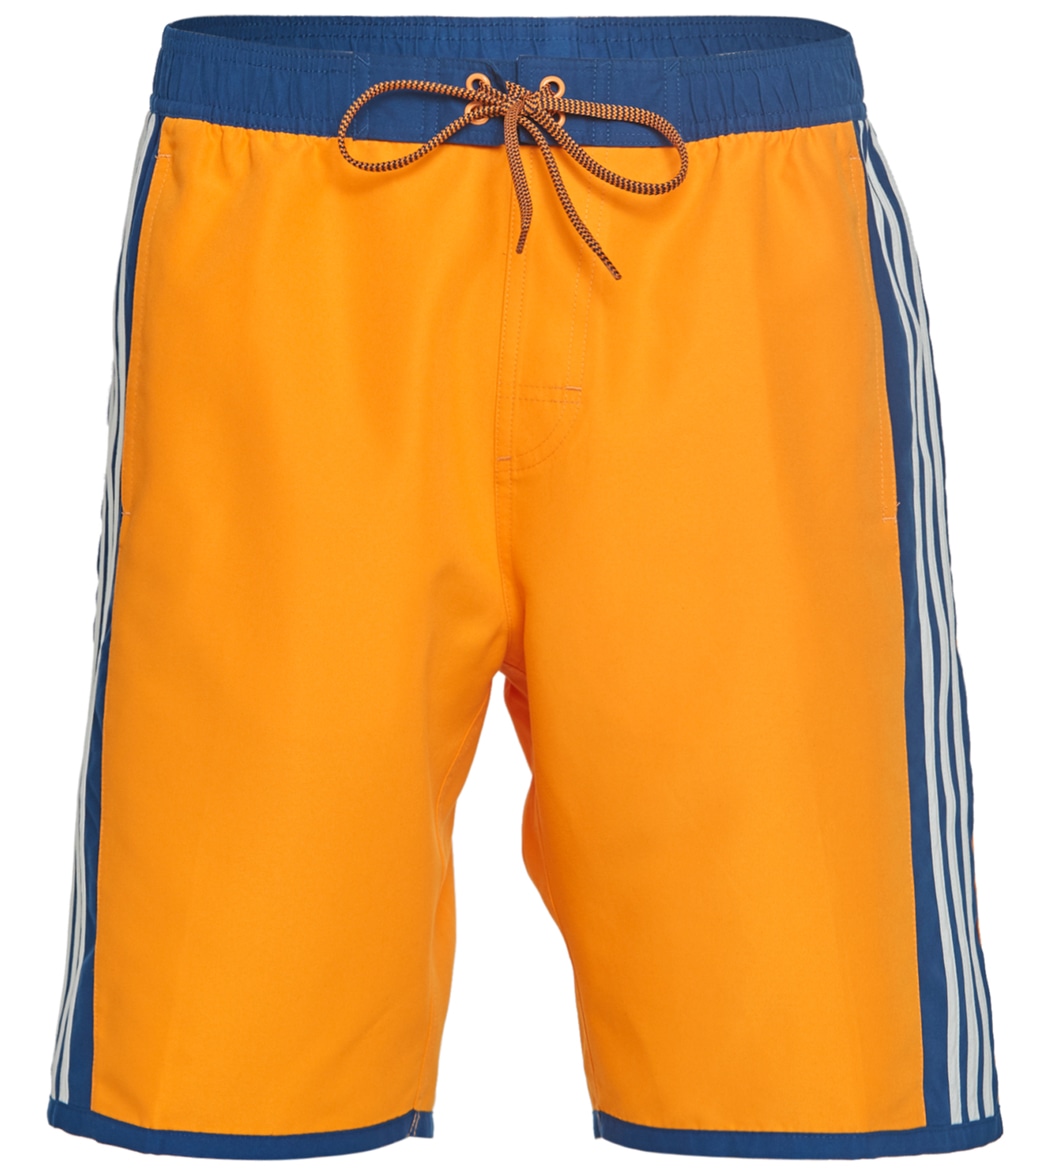 Adidas Men's 20 Hoopshot Volley Shorts - Orange Small - Swimoutlet.com